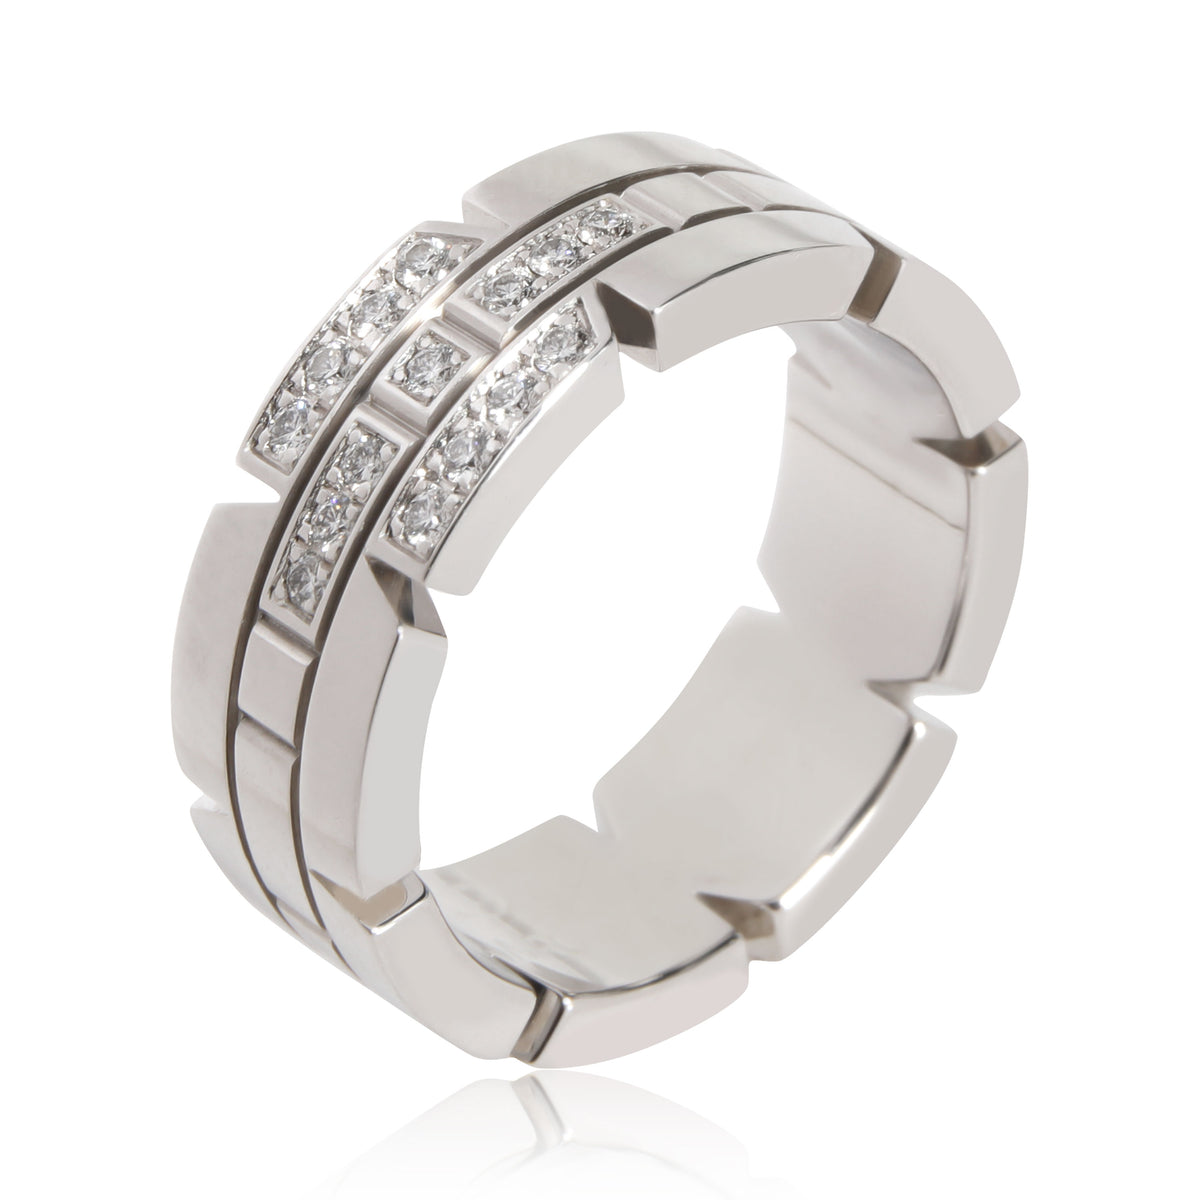 Cartier Tank Francaise Diamond Ring in 18K White Gold 0.10 CTW